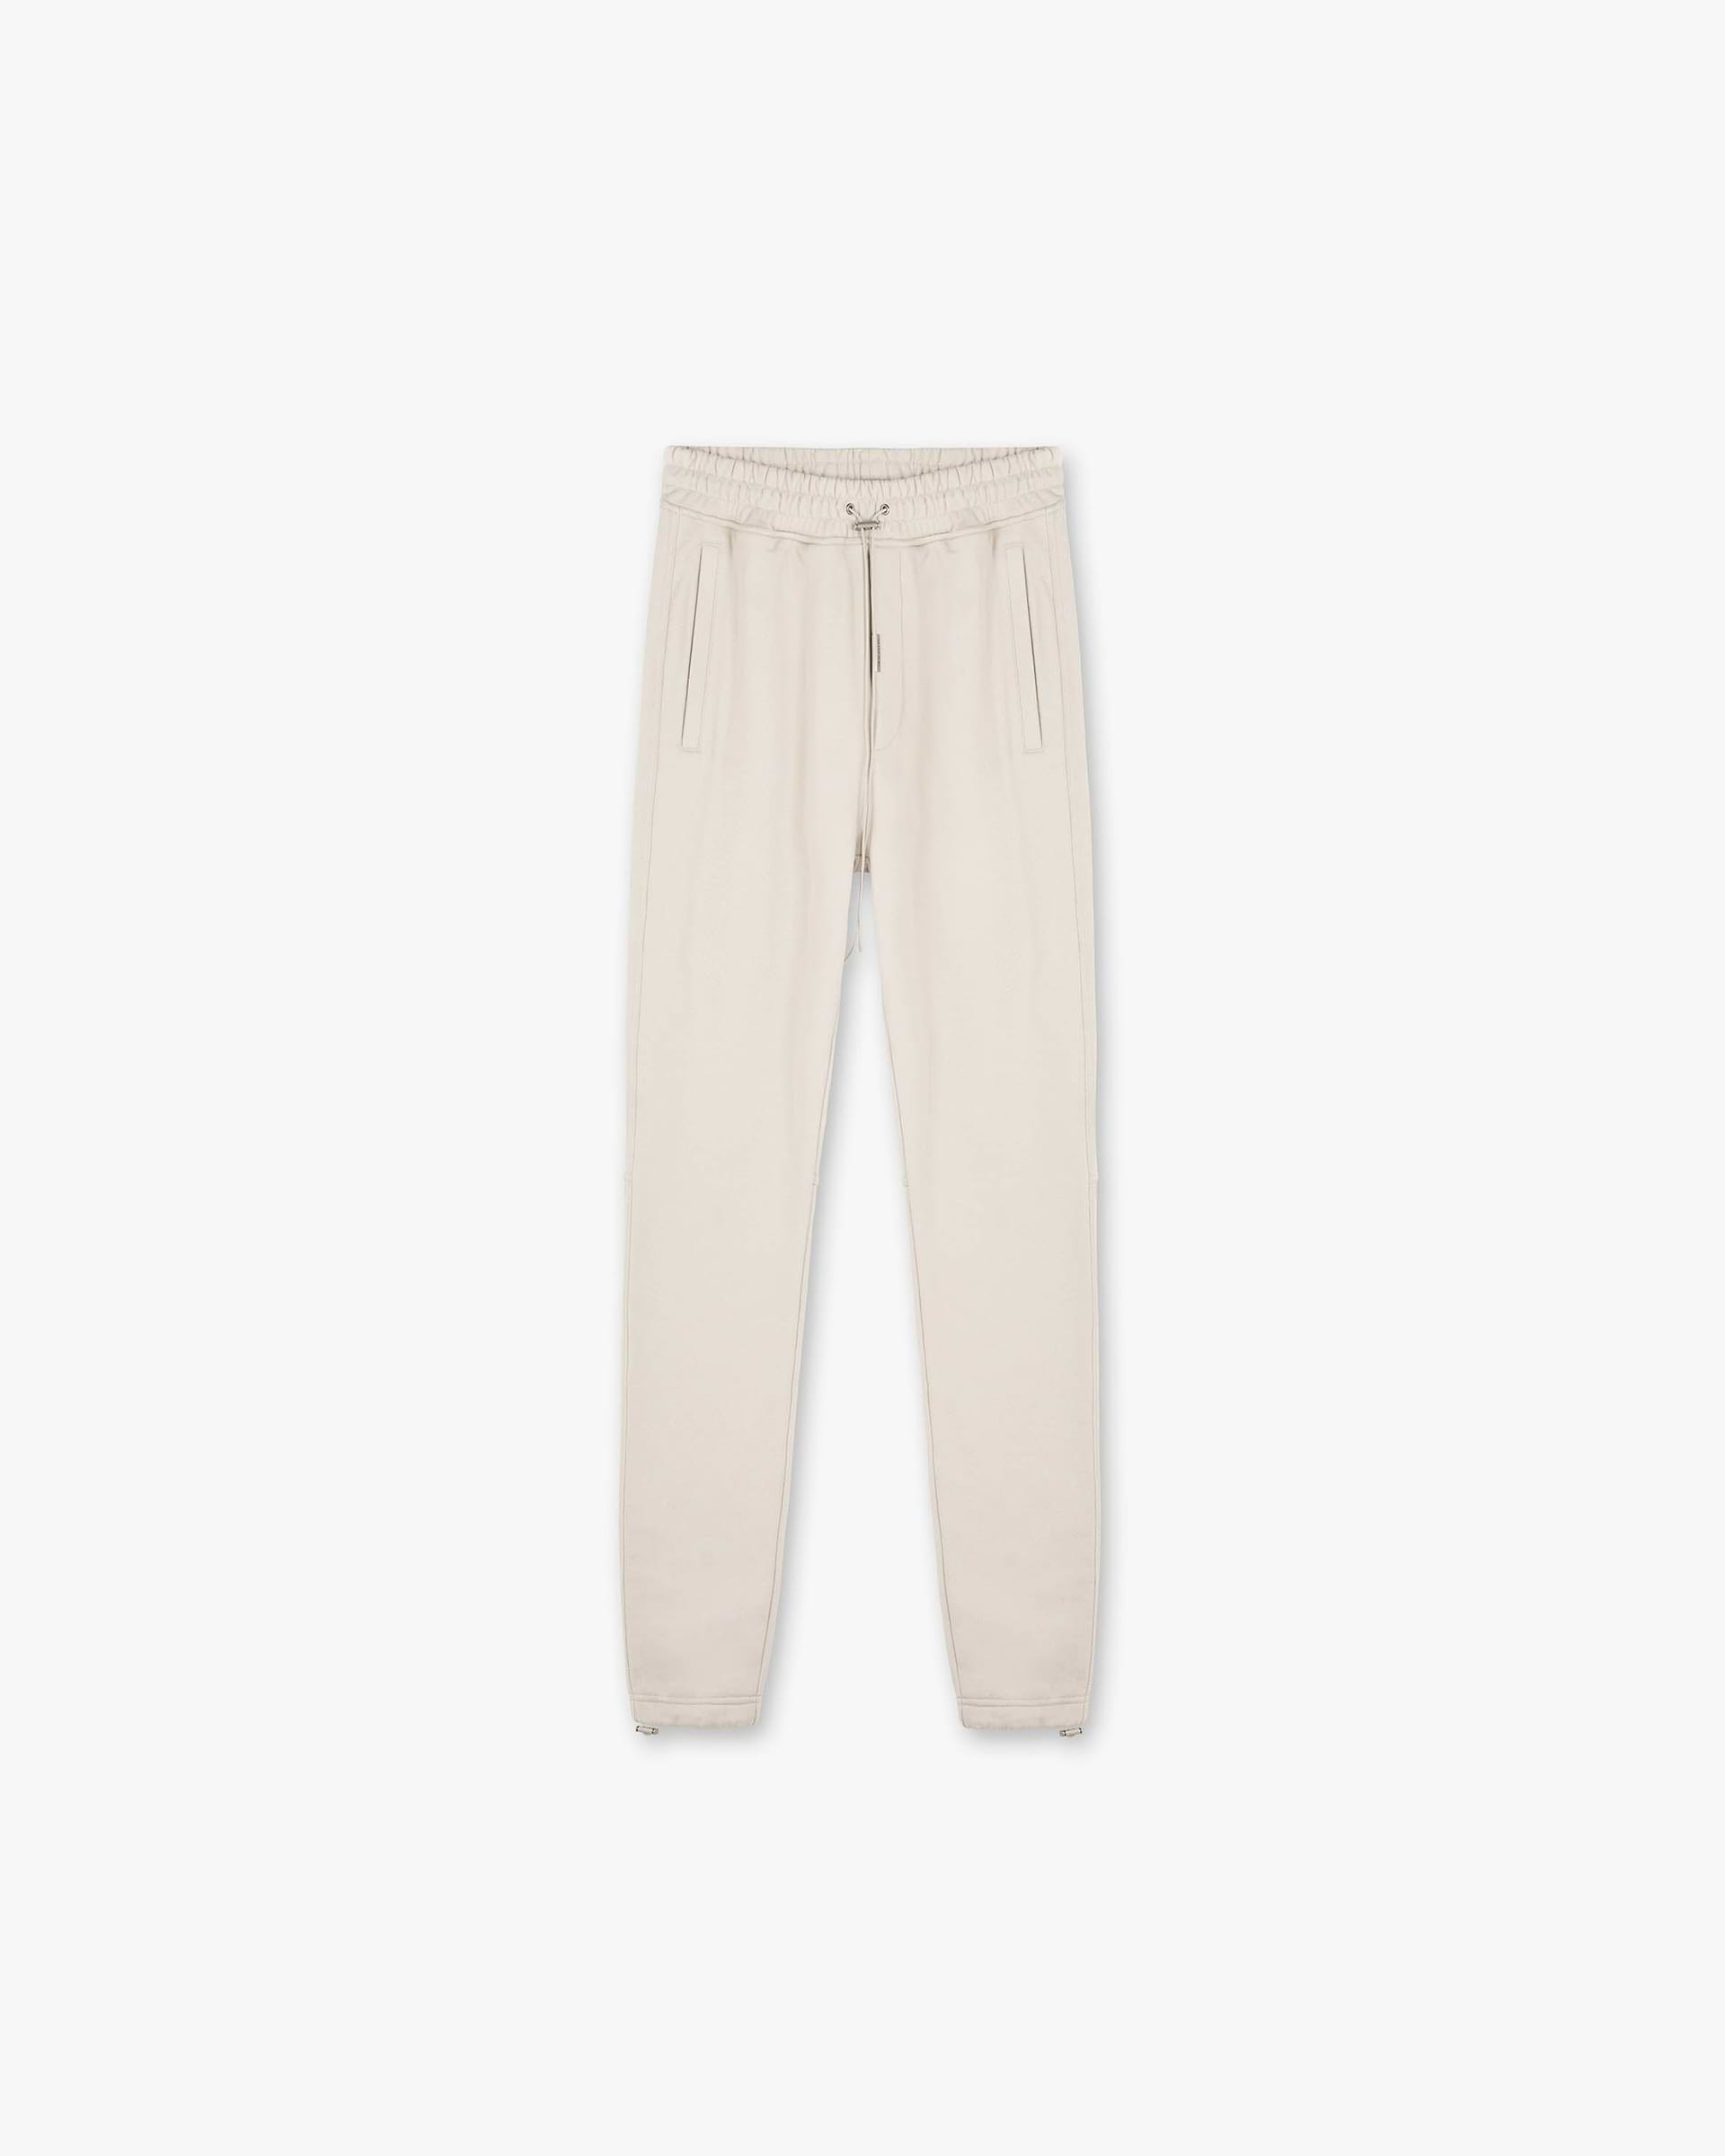 Blank Sweatpant | Vintage White Pants BLANKS | Represent Clo